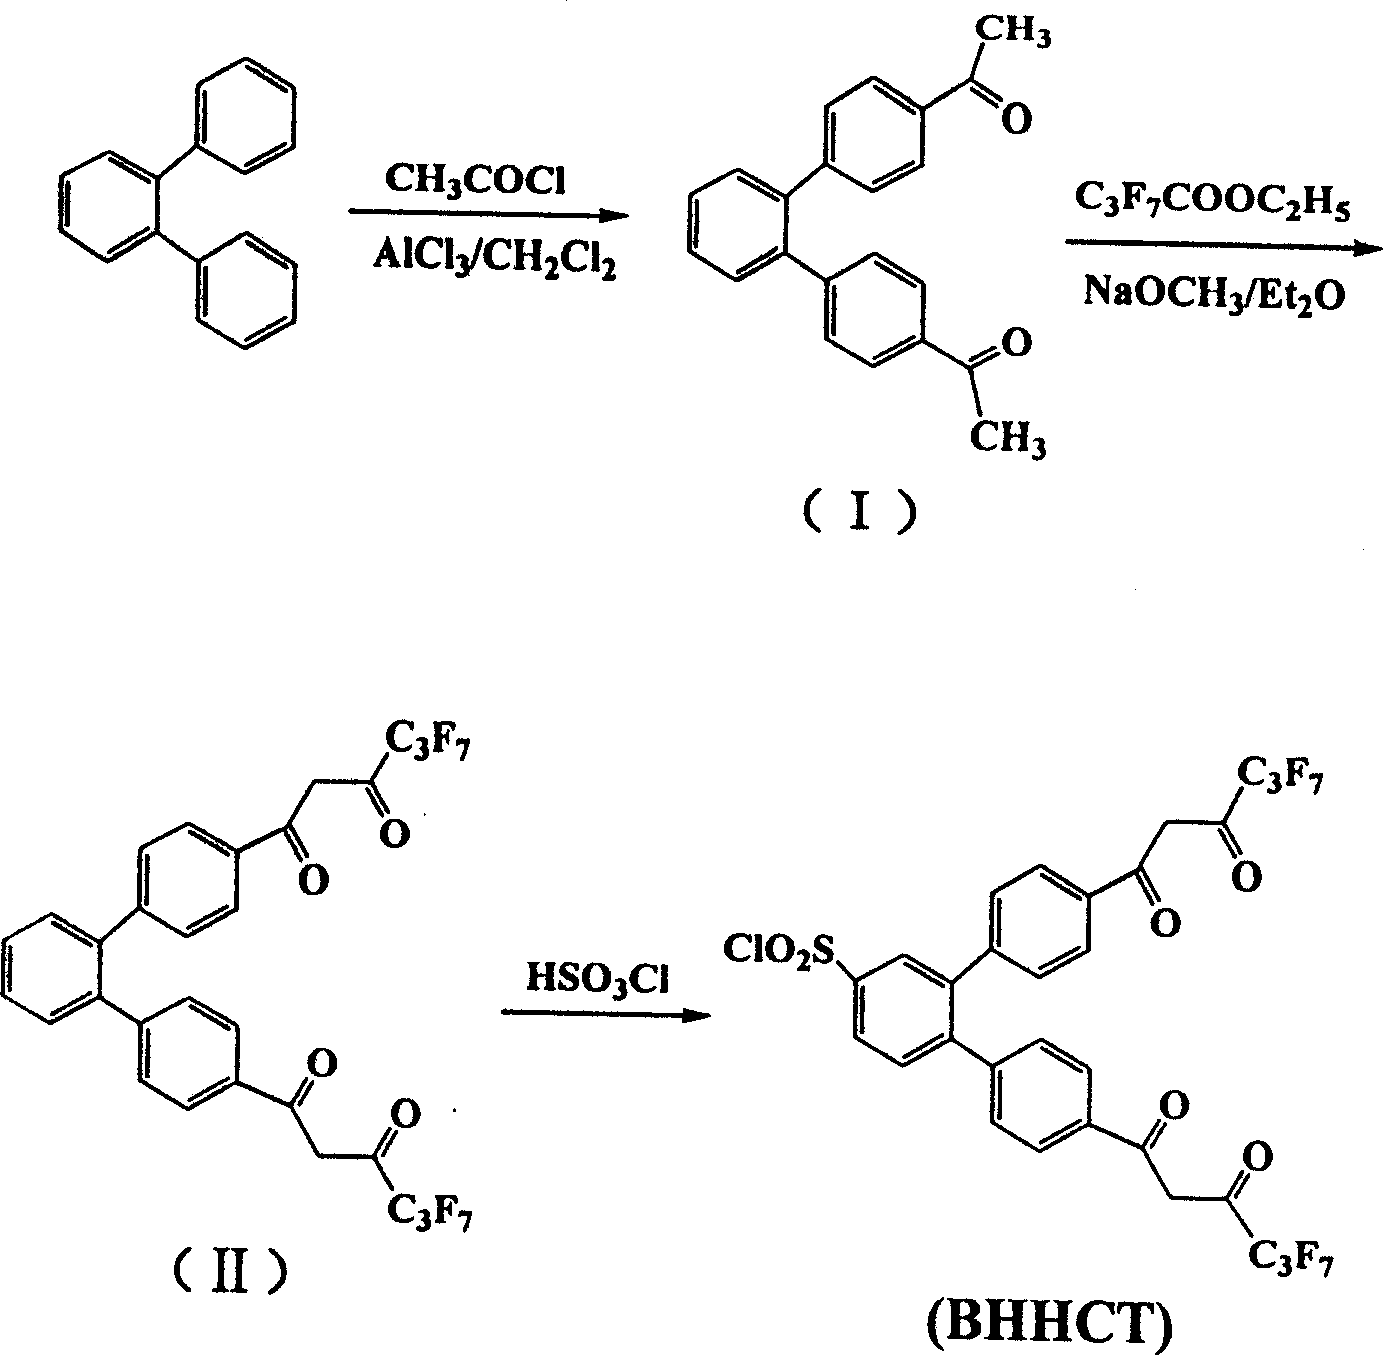 Trivalent europium-beta-diketone fluorescent label and uses thereof